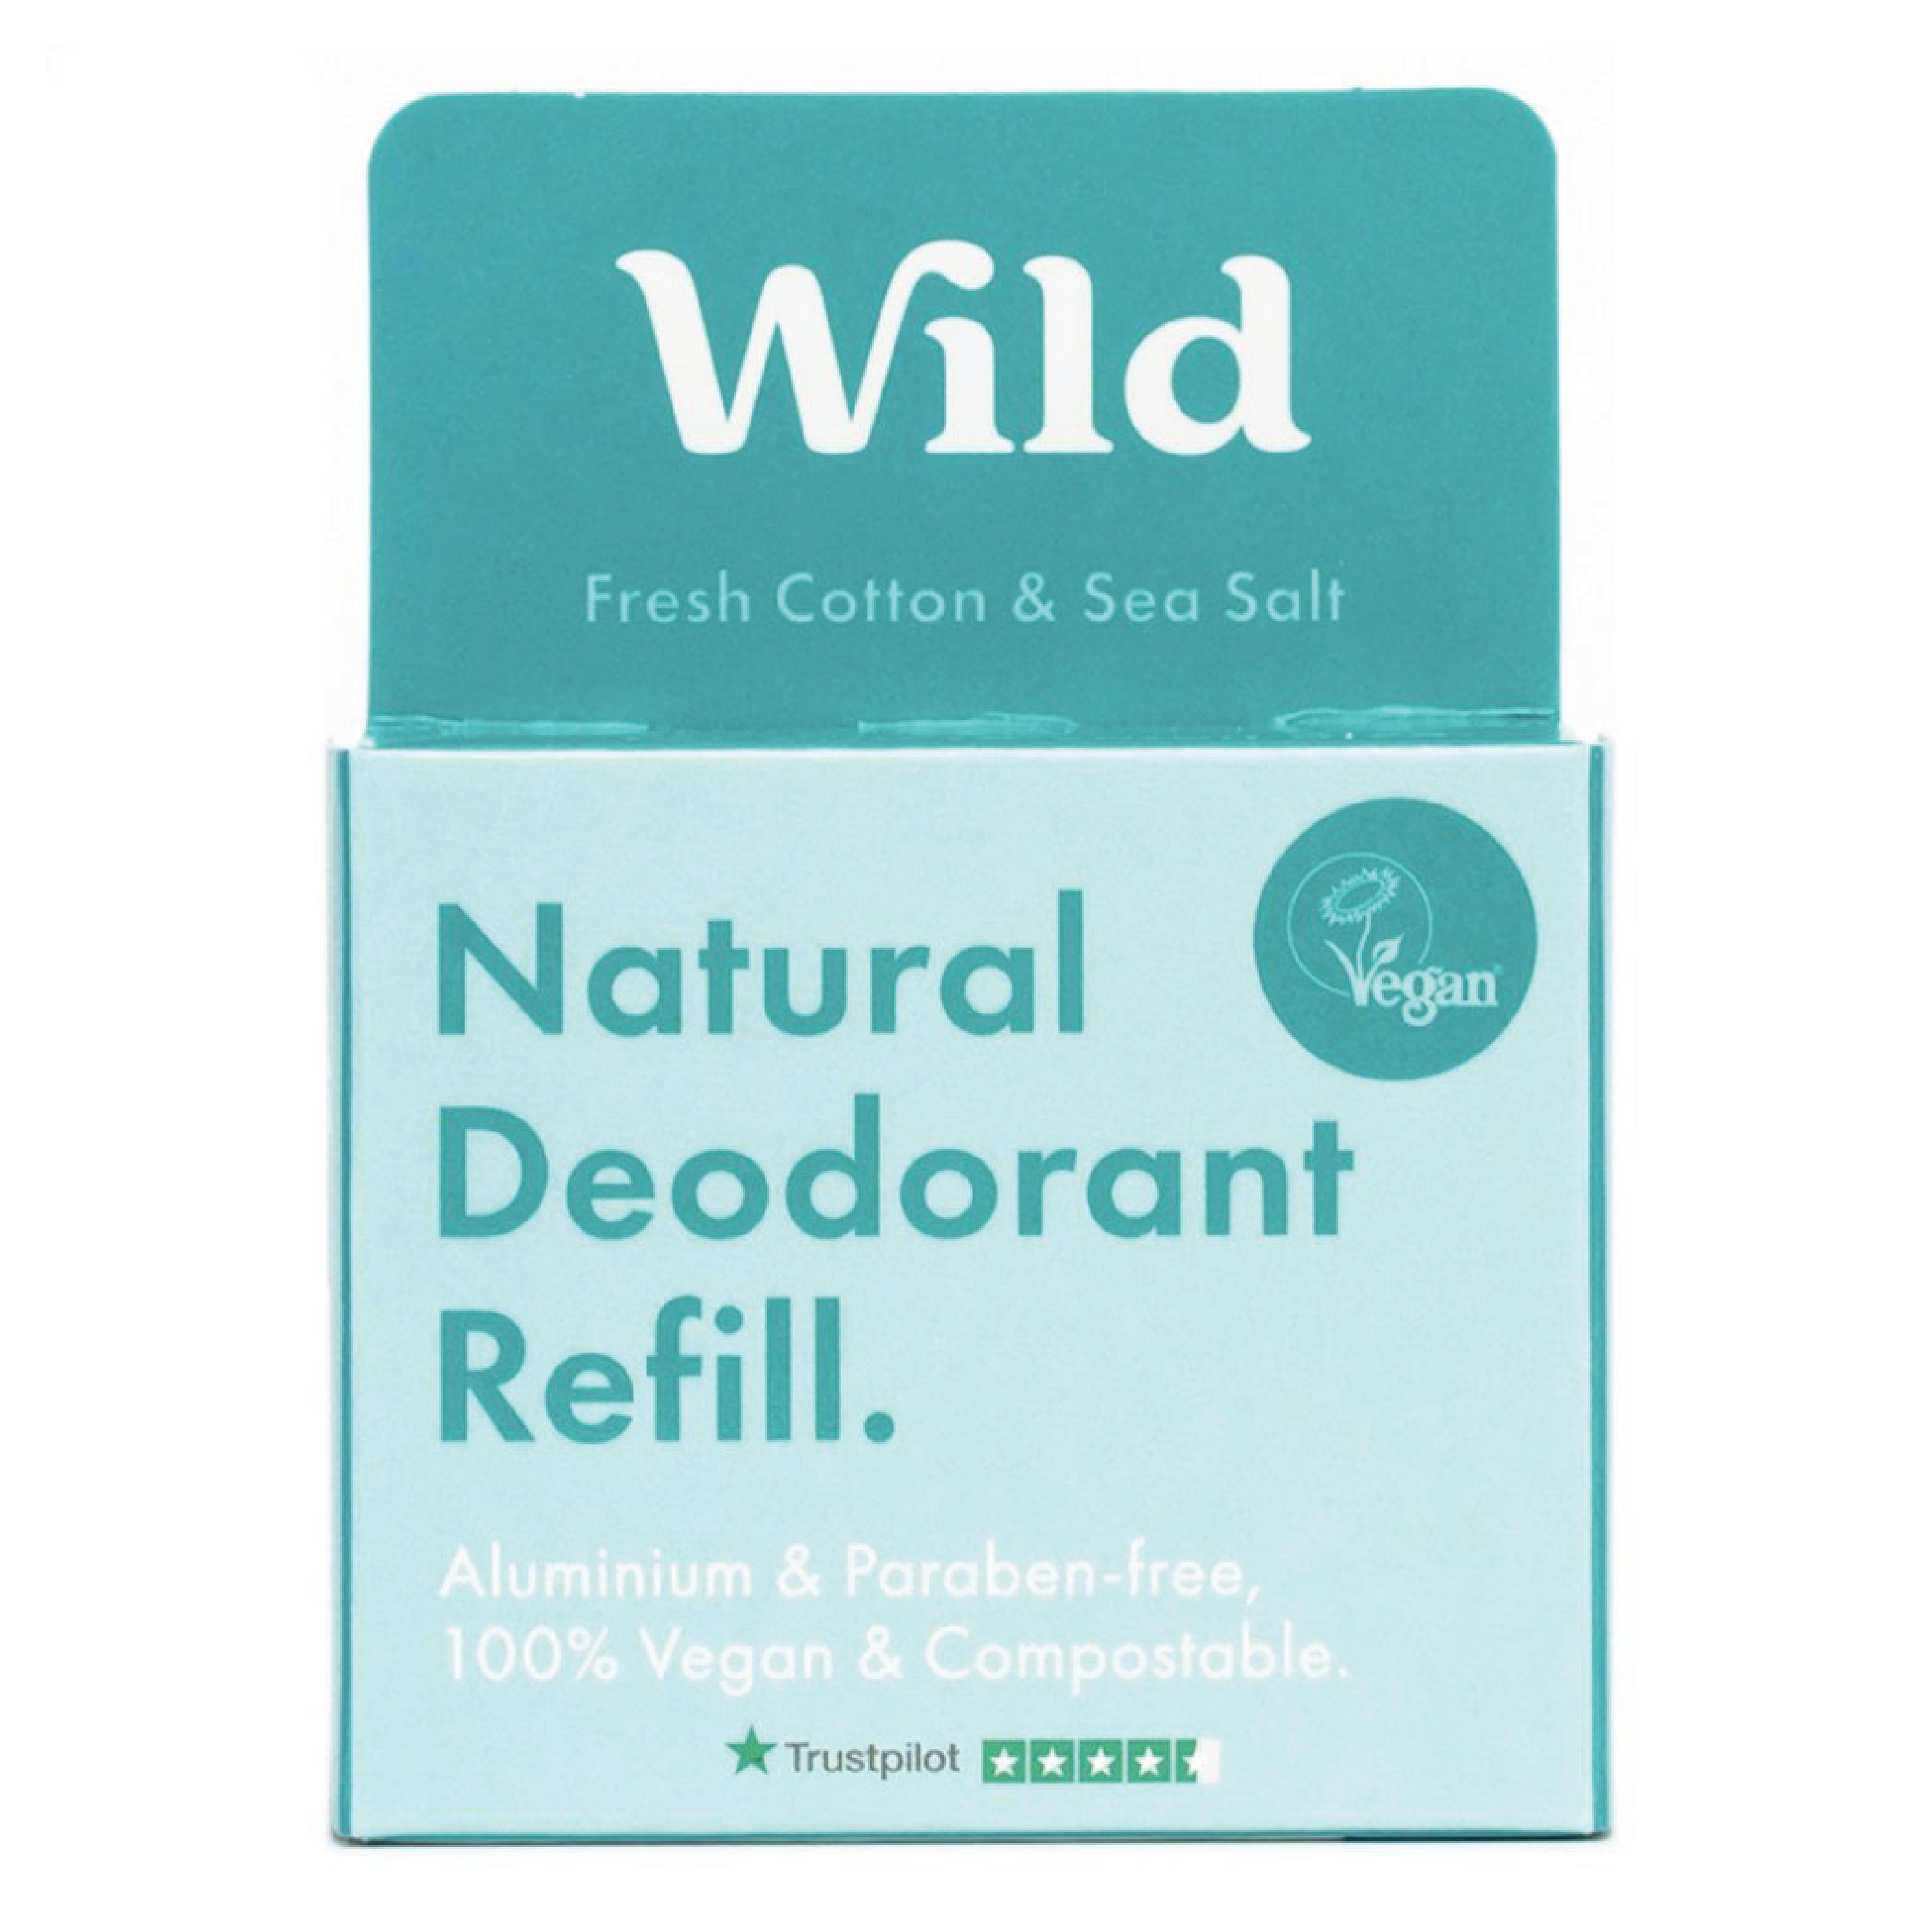 Wild Wild Deo Cotton & Sea Salt refill, 40 gram